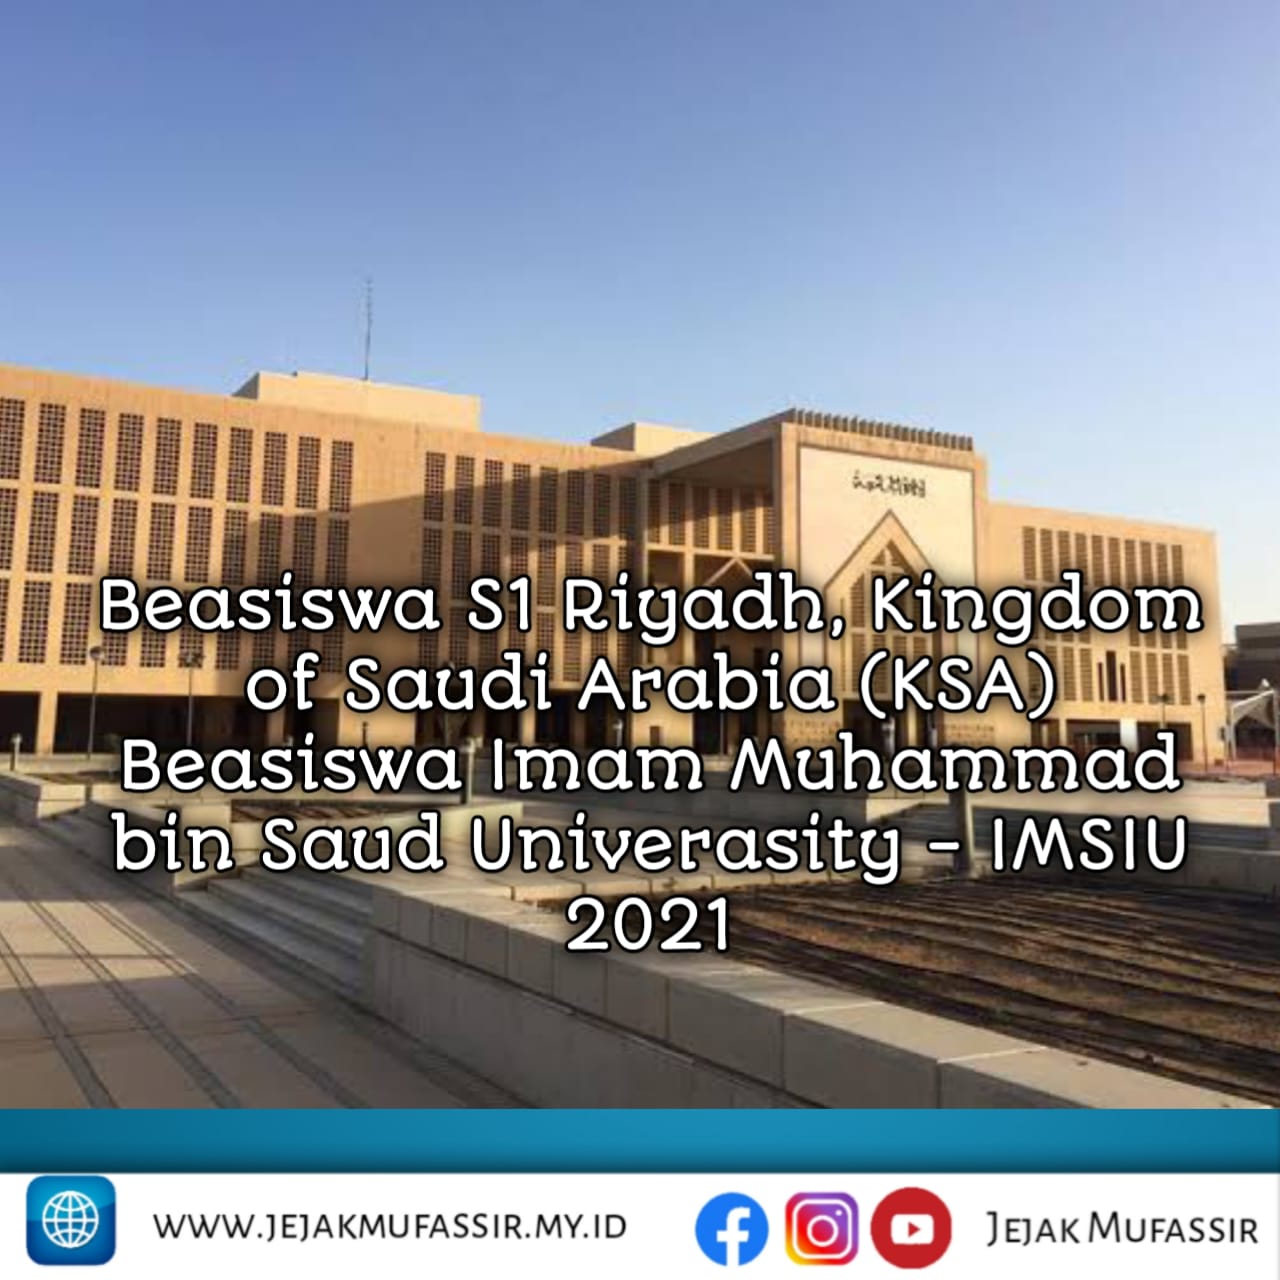 Beasiswa S1 Riyadh, Kingdom of Saudi Arabia (KSA) - Imam Muhammad bin Saud University (IMSIU) 2021